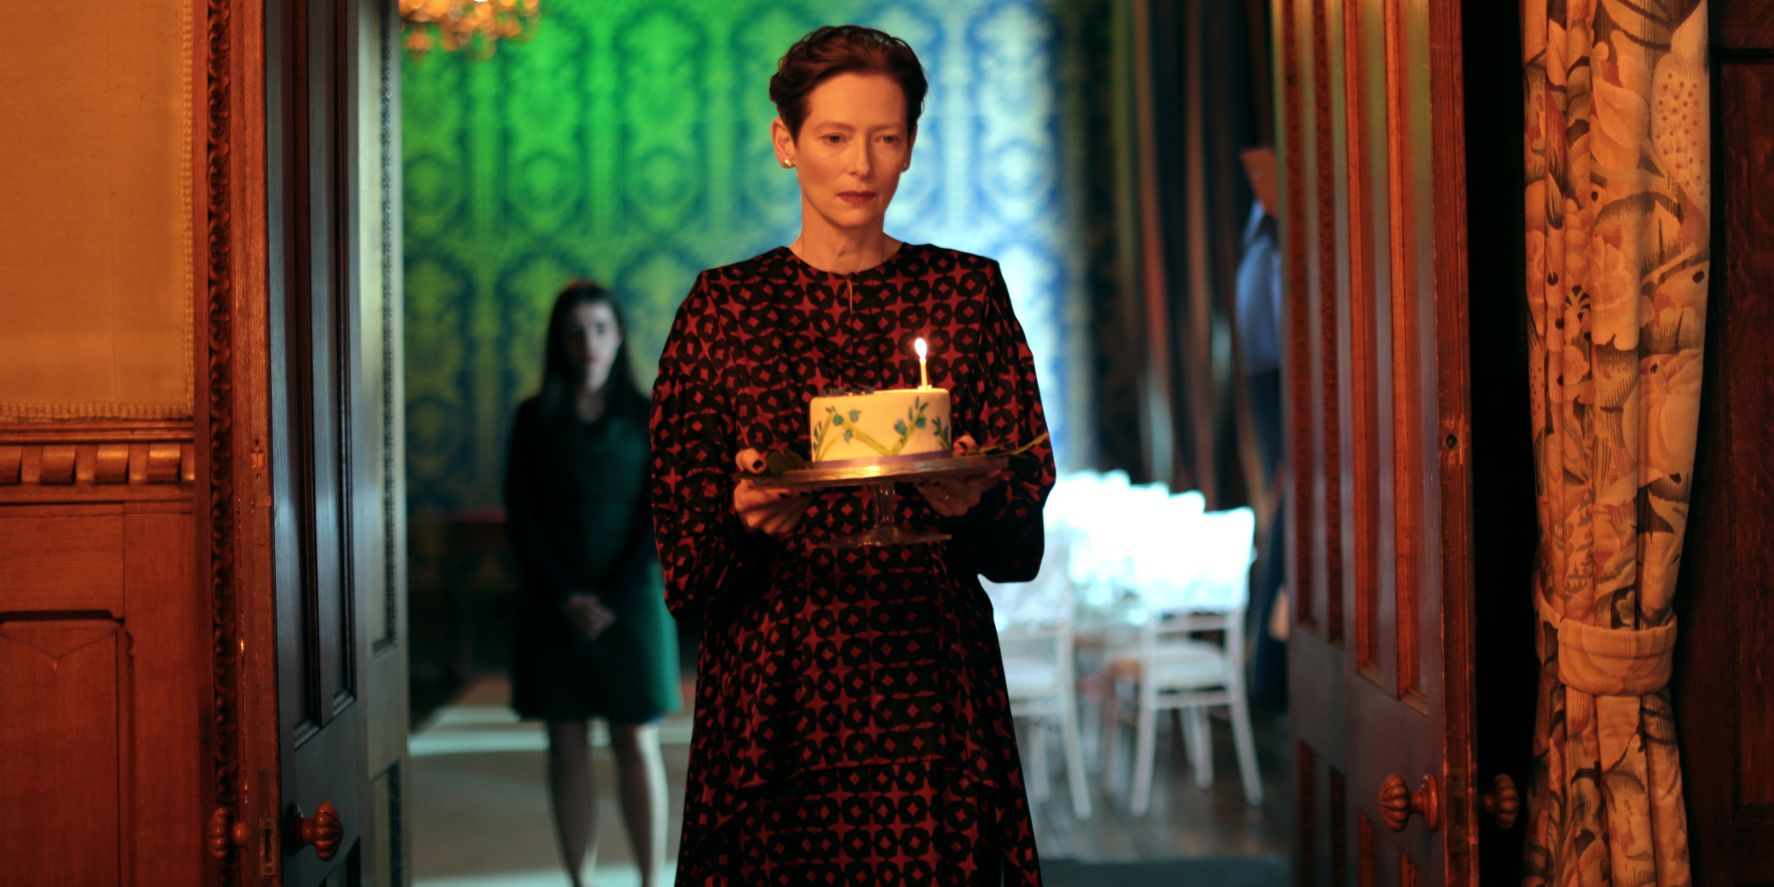 Tilda Swinton as Julie holding a birthday cake in The Eternal Daughter